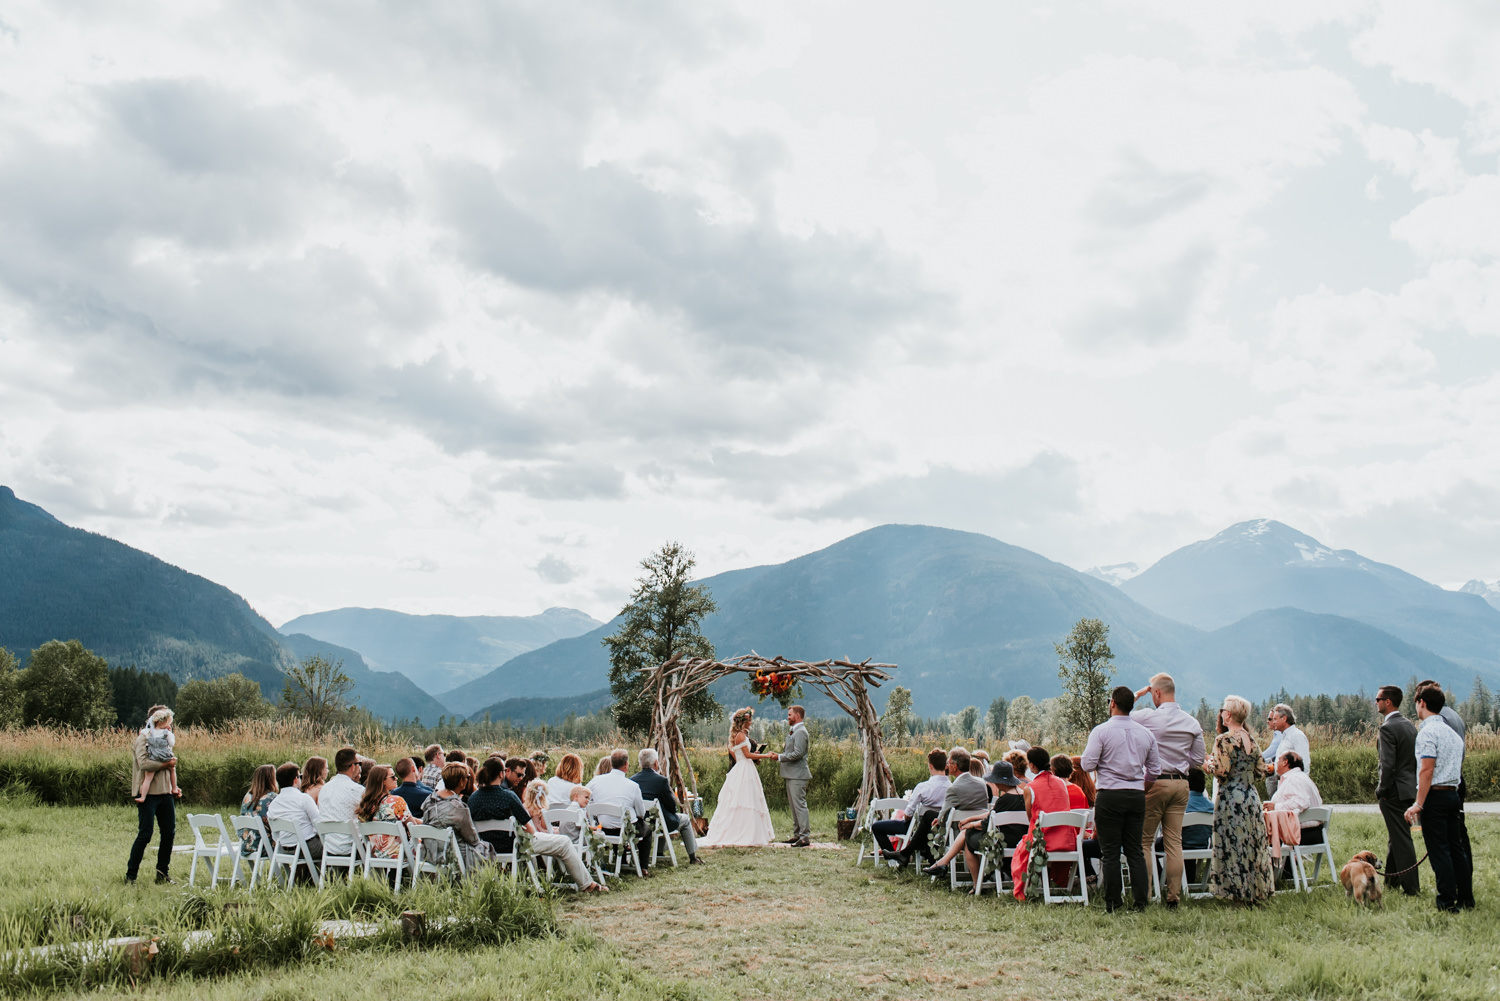 Pemberton Wedding Venue with Mountain Views